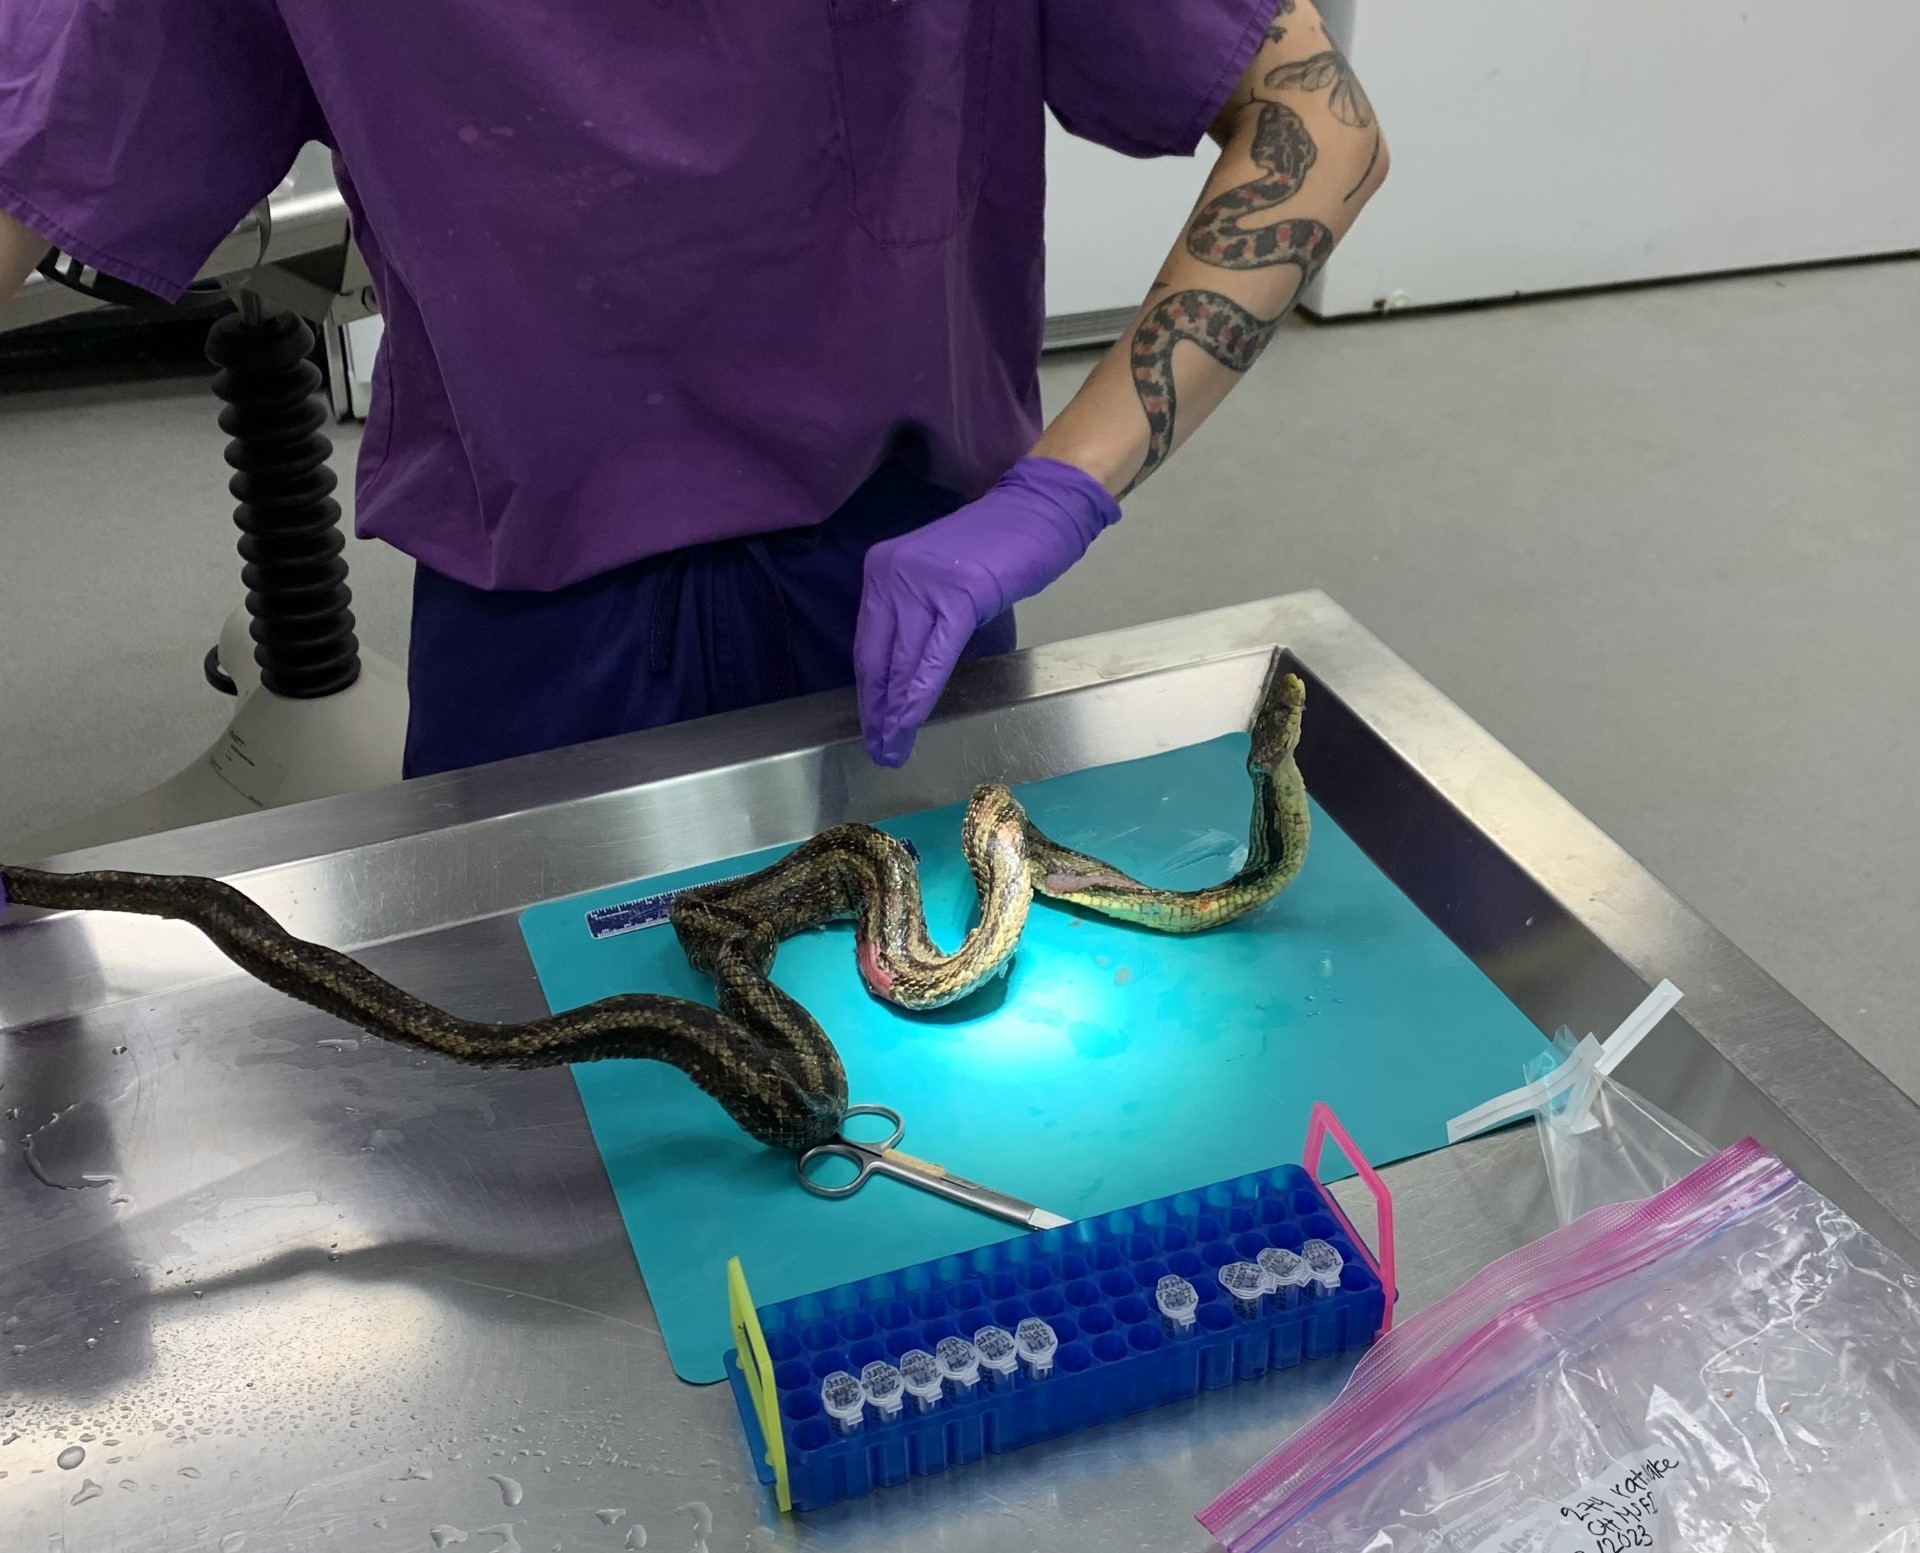 Wild snake necropsy for multi-pathogen surveillance research. Photo: Jack Timmons